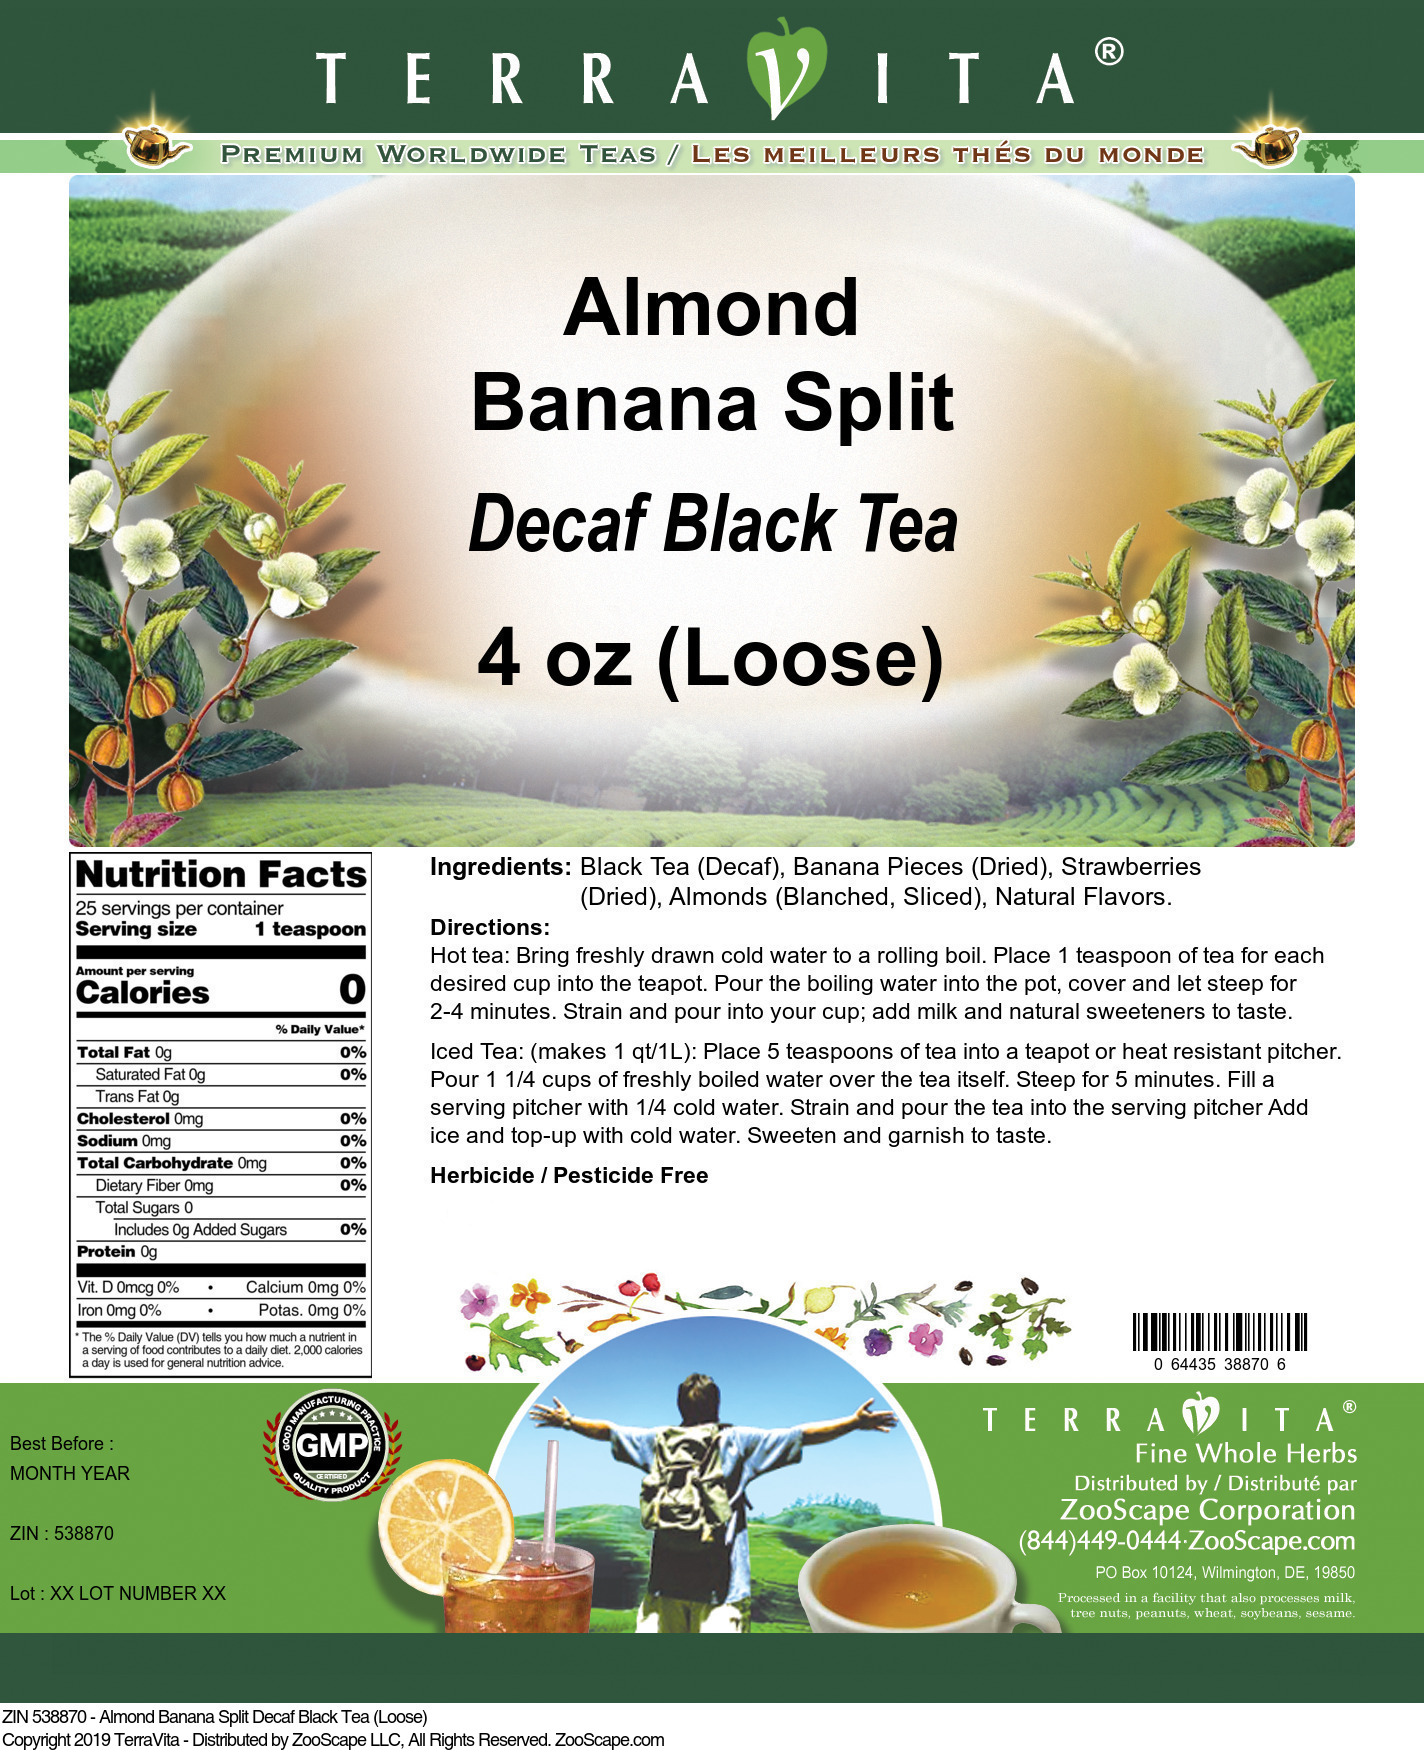 Almond Banana Split Decaf Black Tea (Loose) - Label